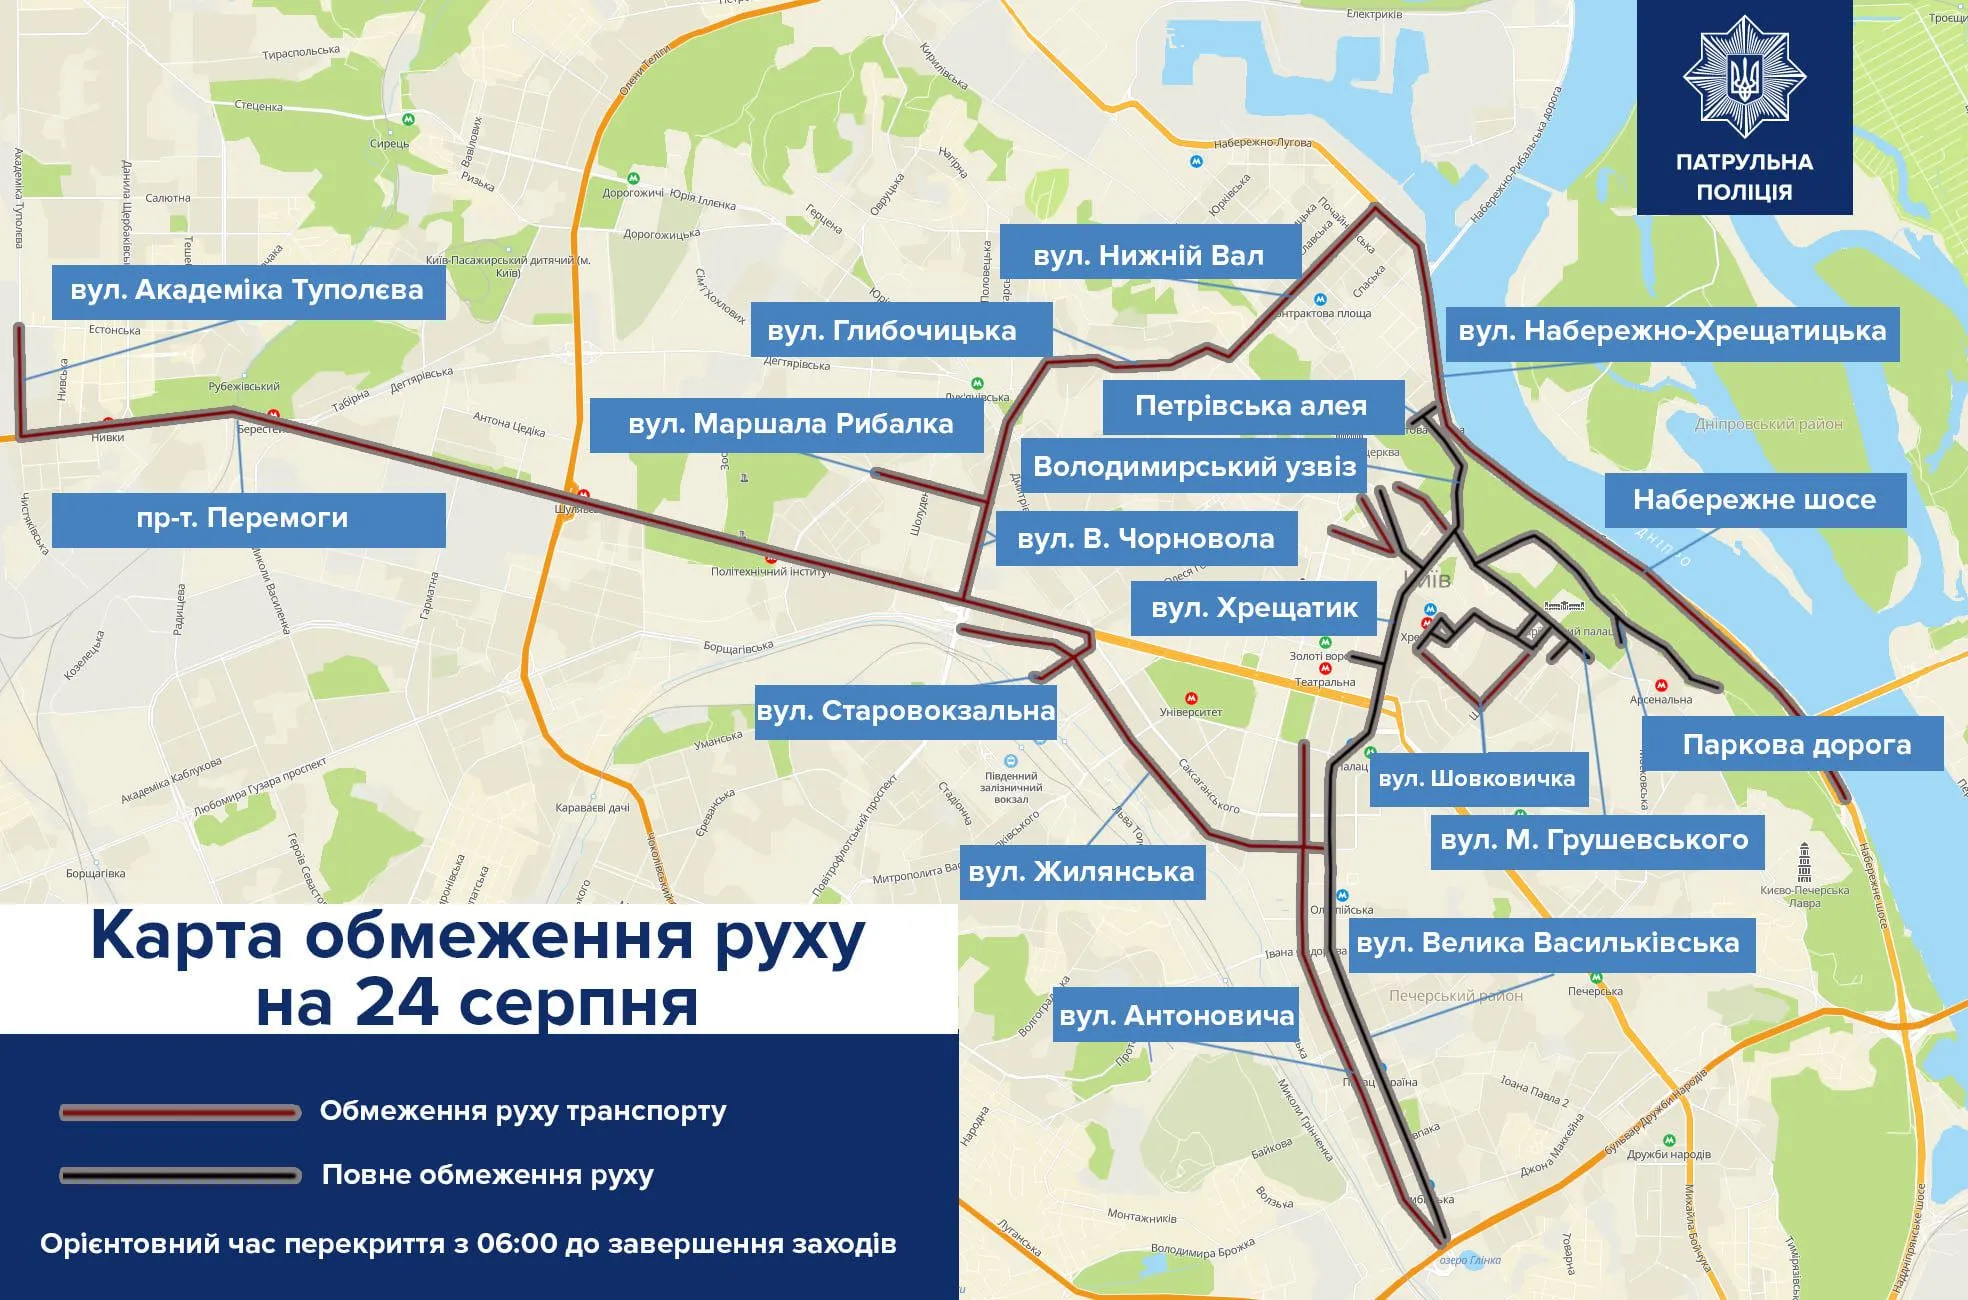 Карта обмежень руху у Києві